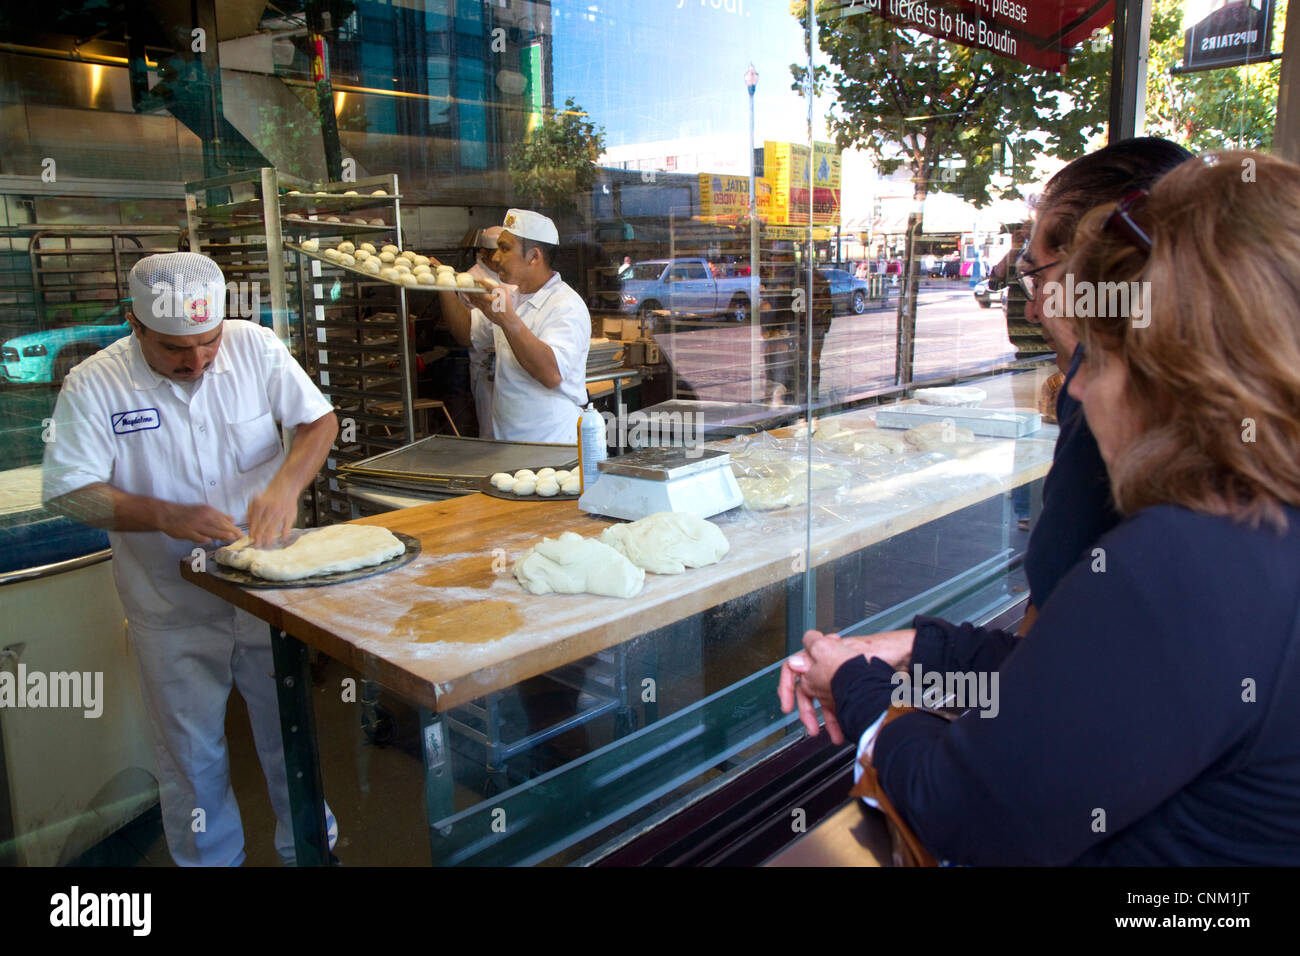 Boudin sourdough bread bakery at Fisherman's Wharf in San Francisco, California, USA. Stock Photo